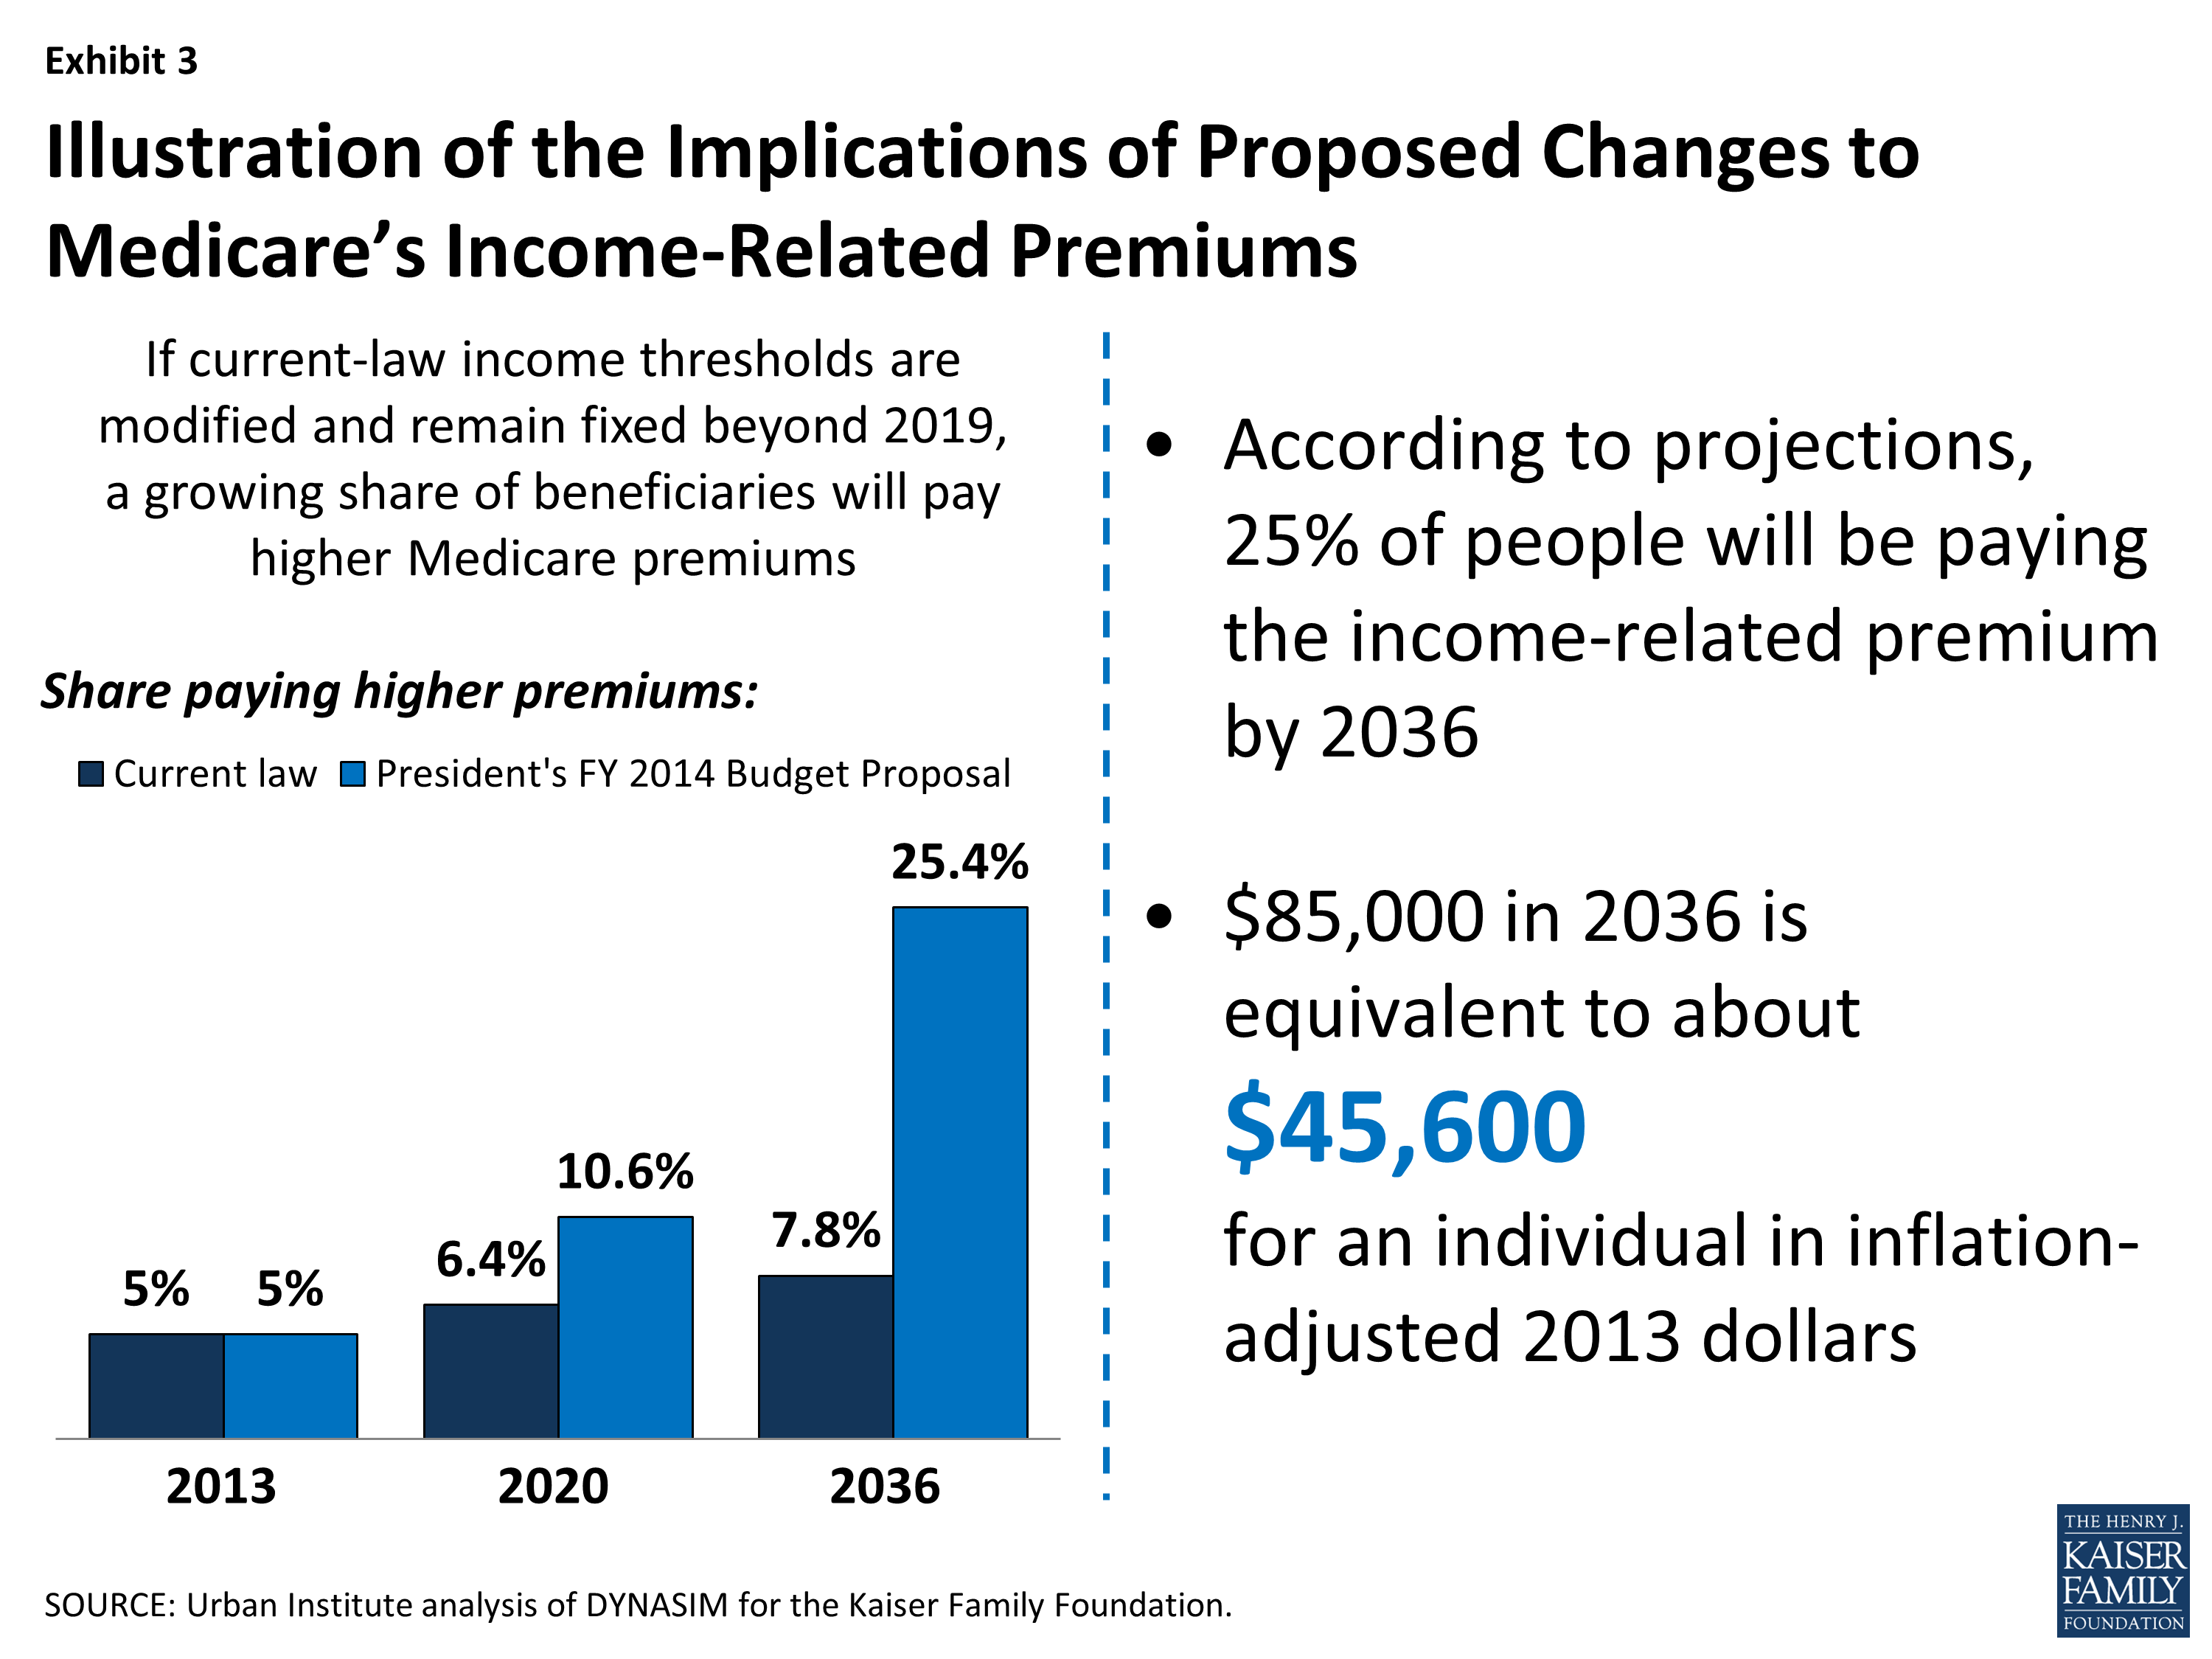 Raising Medicare Premiums for Beneficiaries Assessing